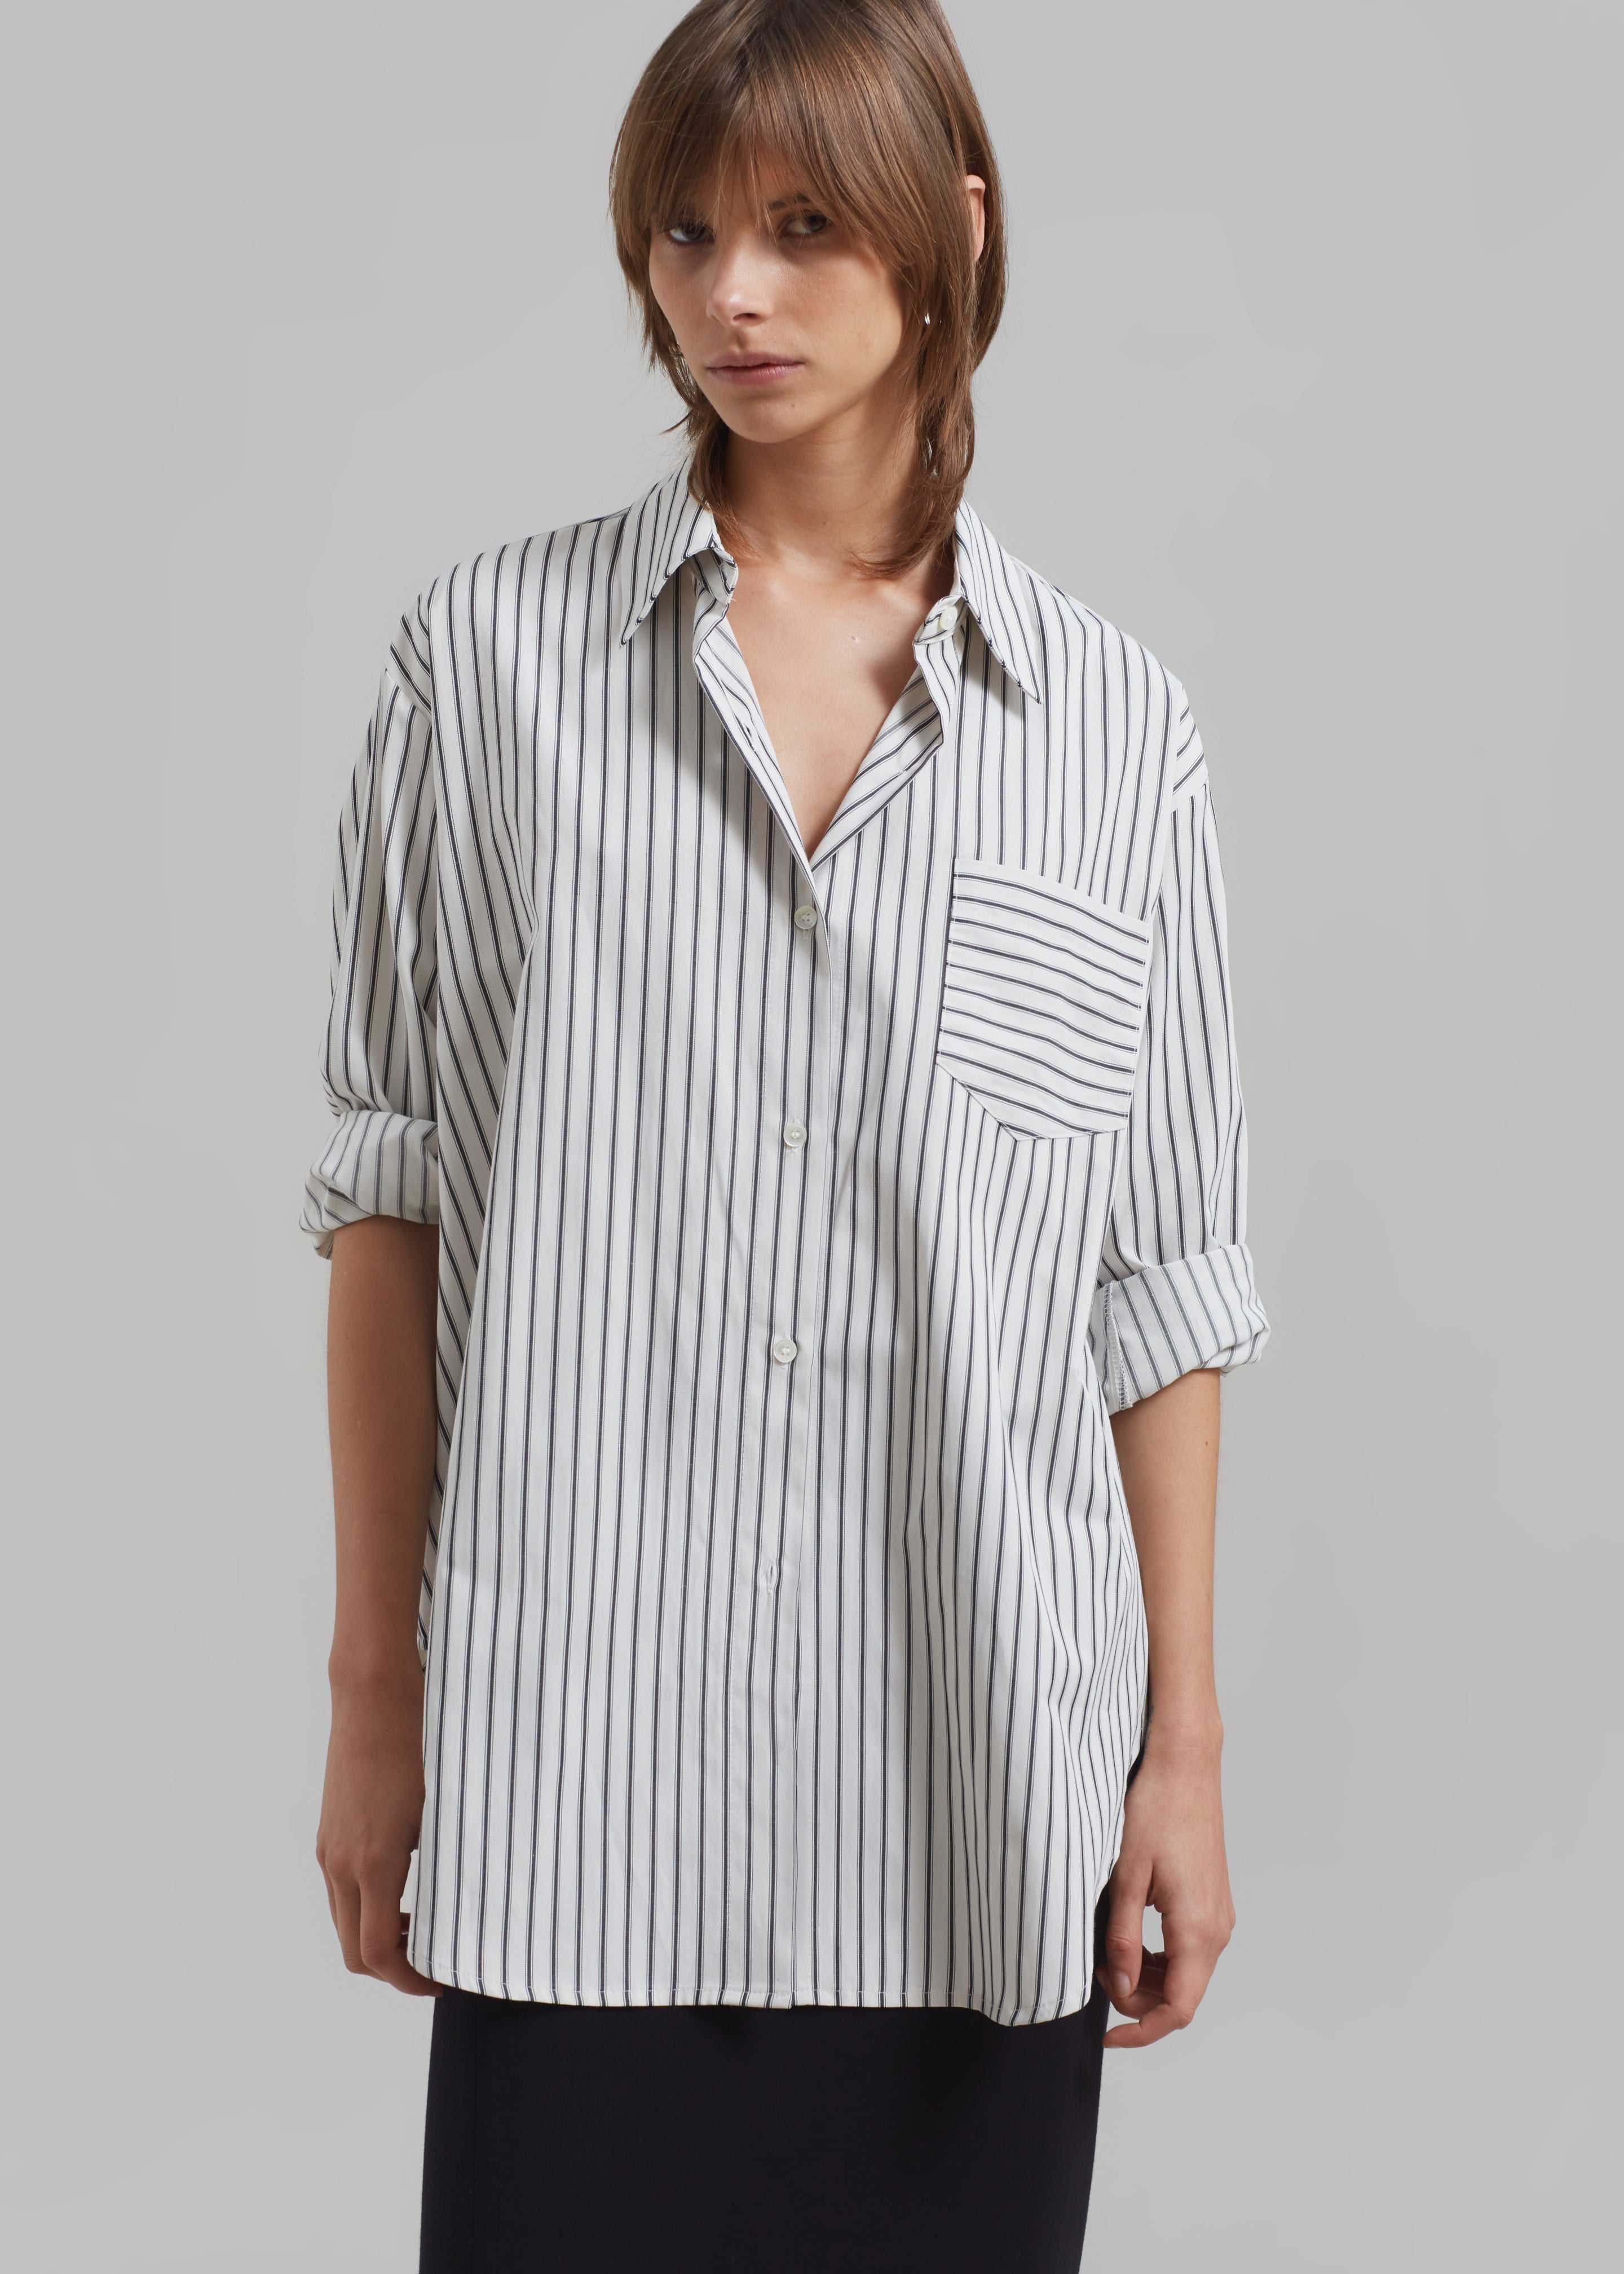 Rine Pocket Shirt - White/Black Stripe - 6